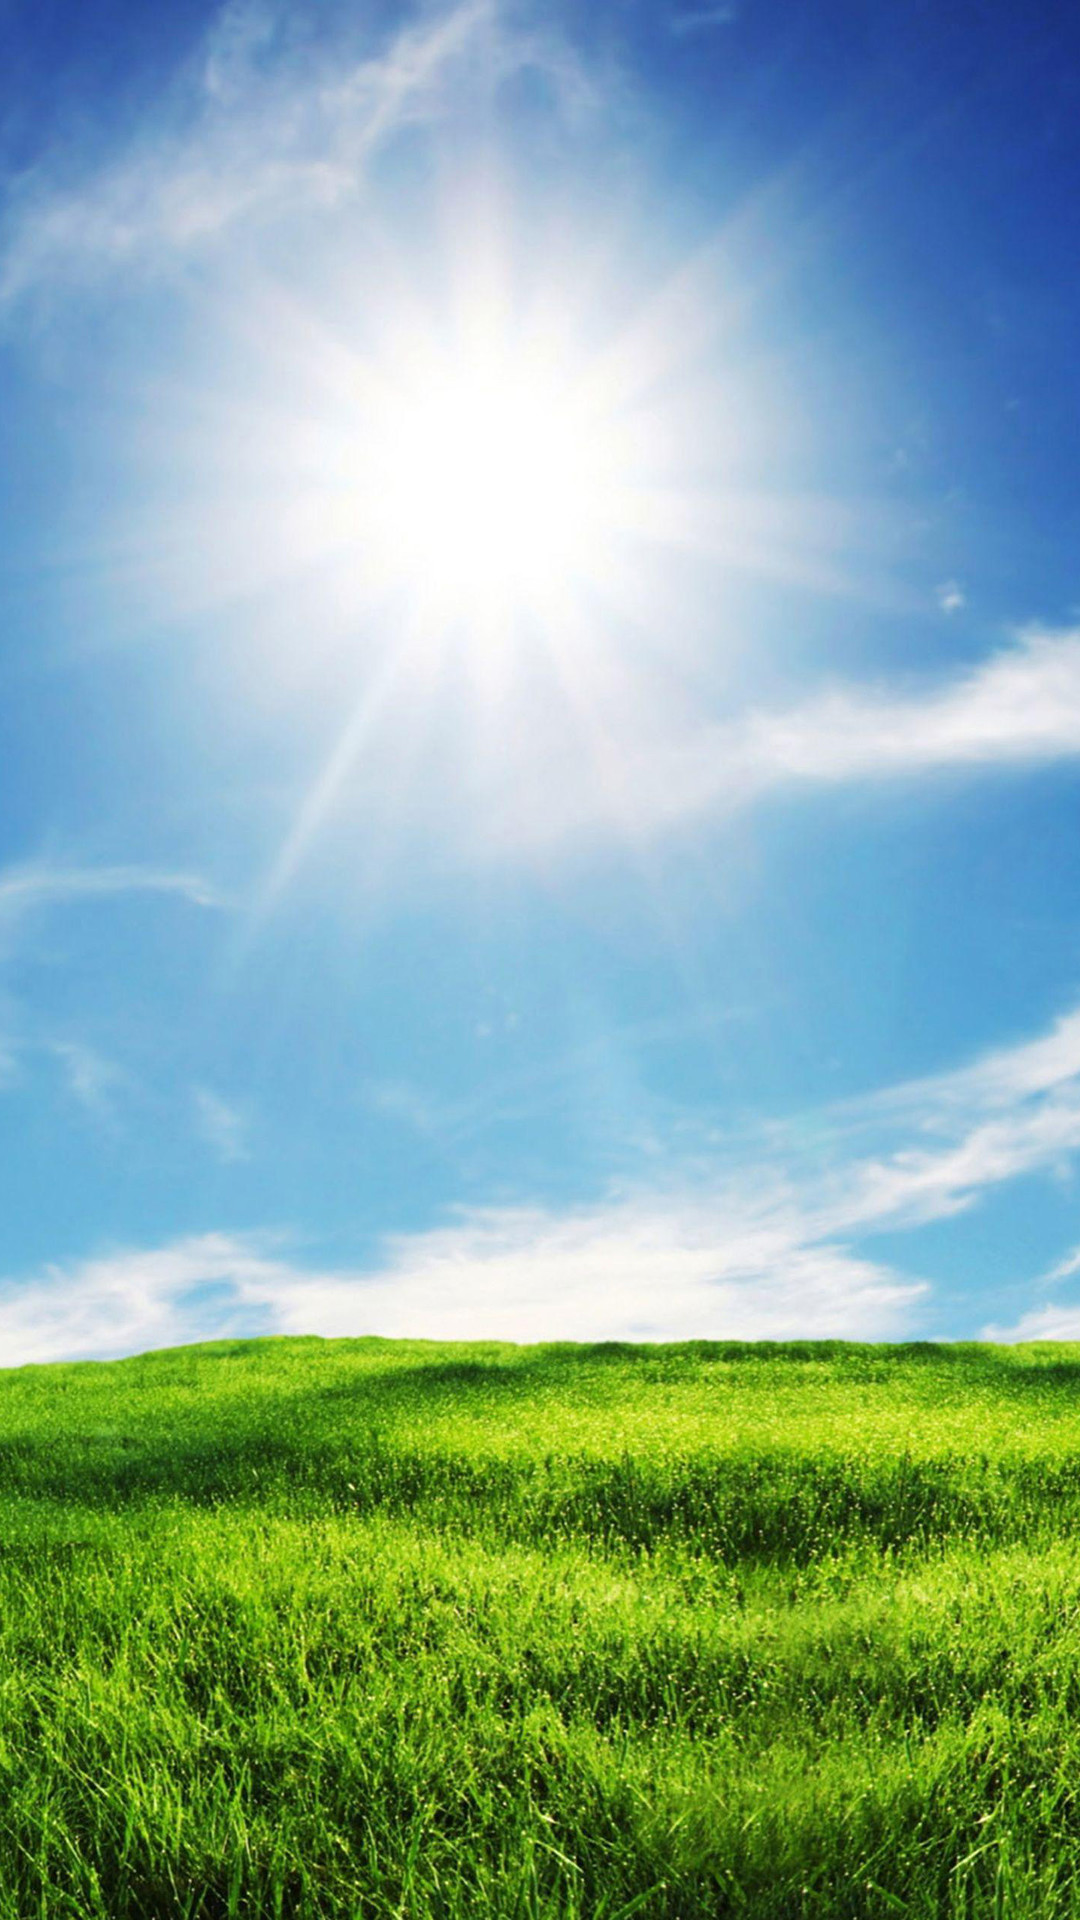 1080x1920 Sunshine and Grass iPhone 6 plus wallpaper - sky, cloud